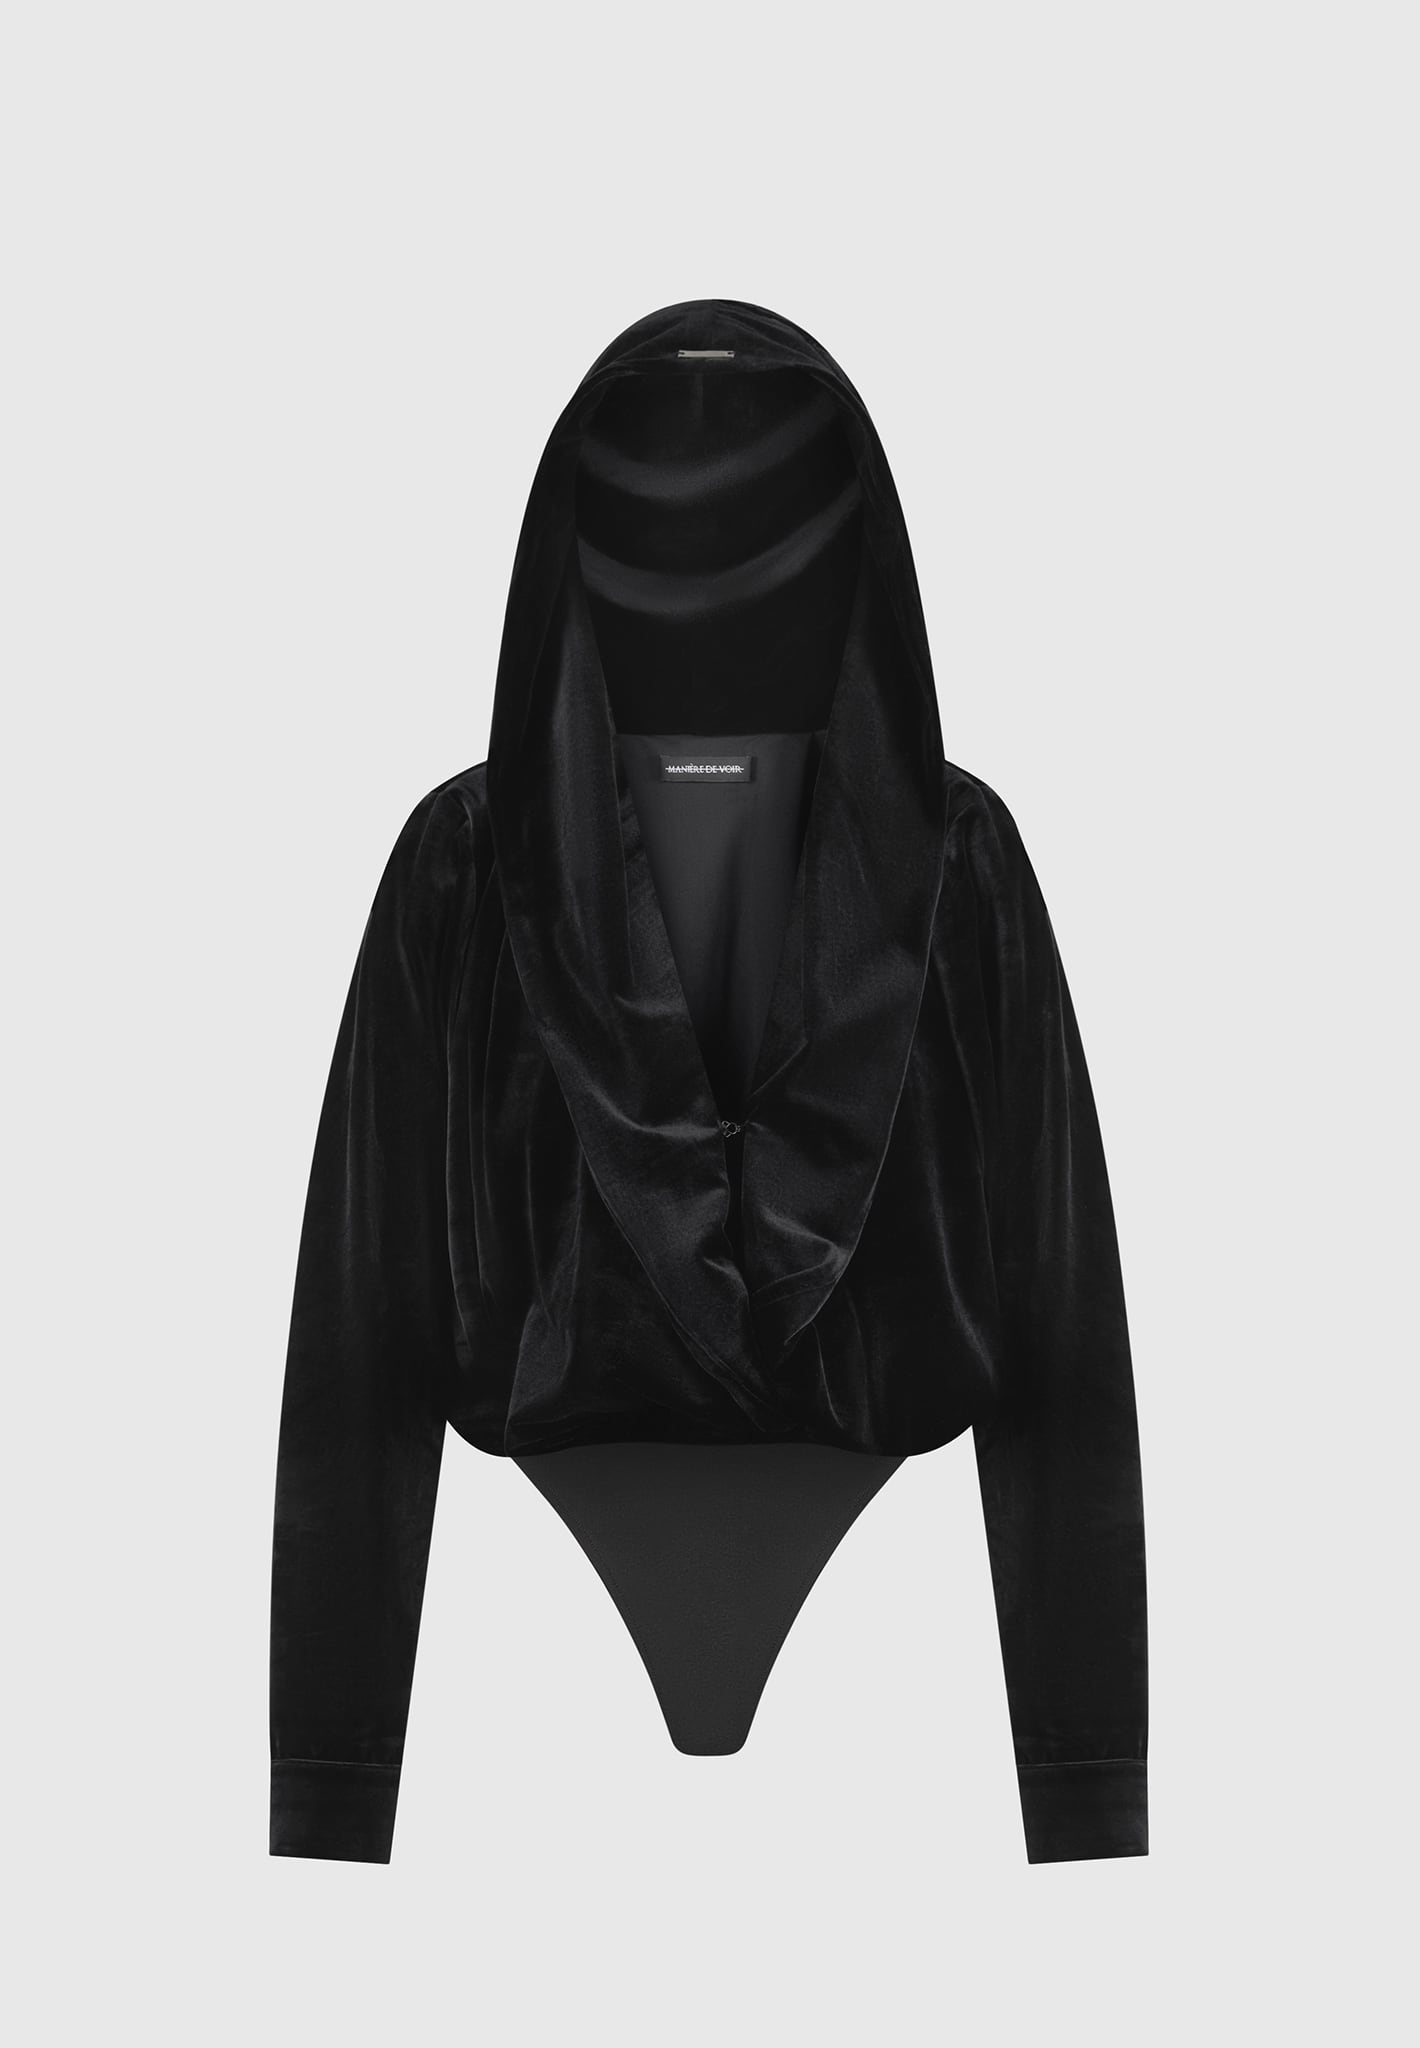 Black Hooded Bodysuit Spandex Leotard Jumpsuit Swimsuit Cloak